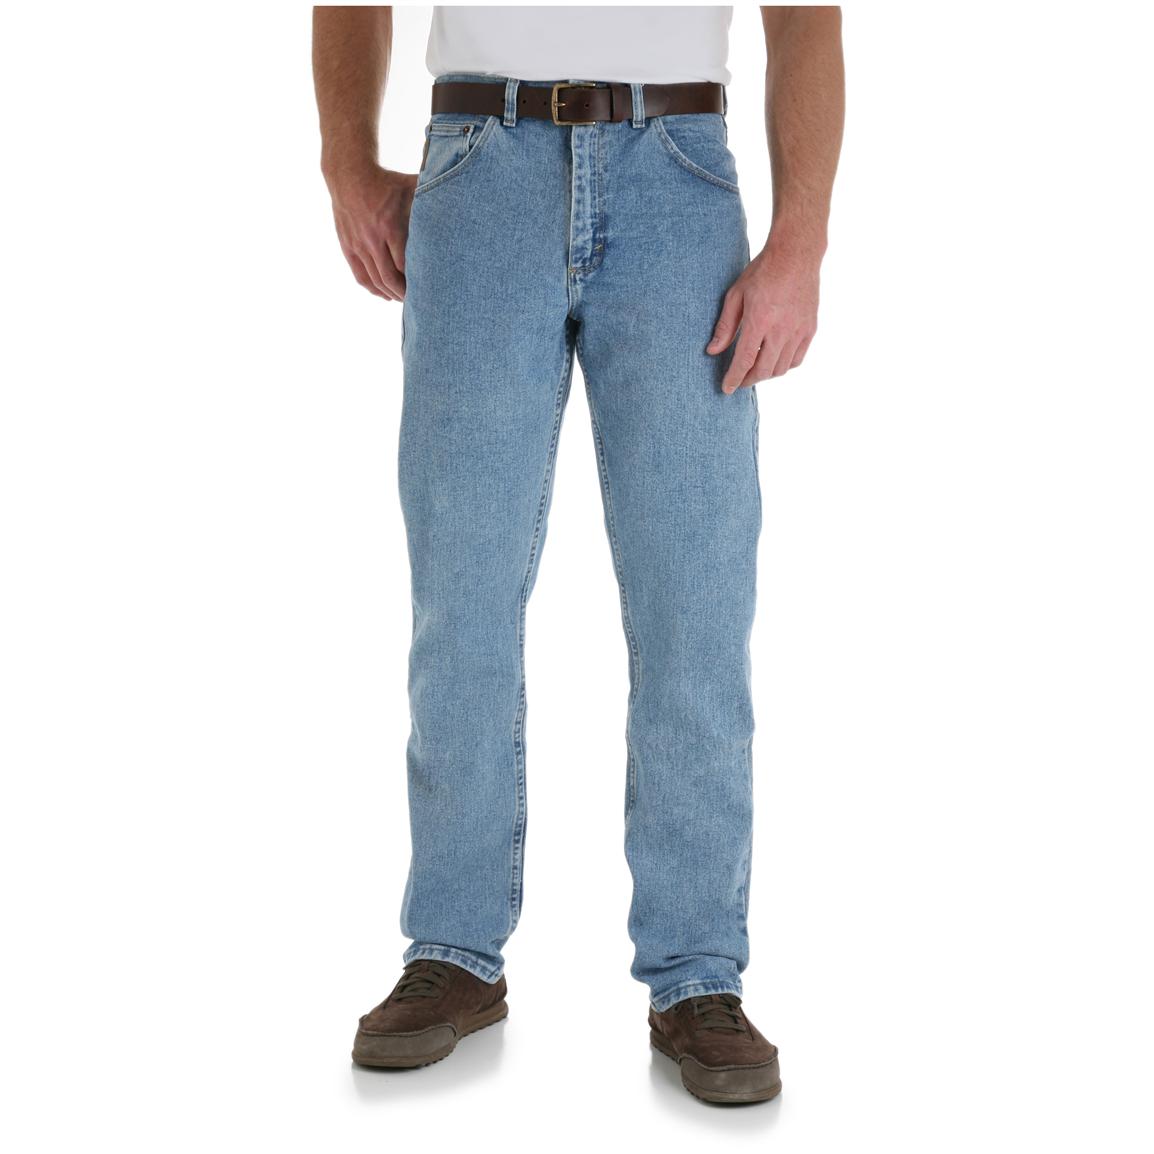 Men s Wrangler  Regular Fit Jeans  226925 Jeans  Pants 